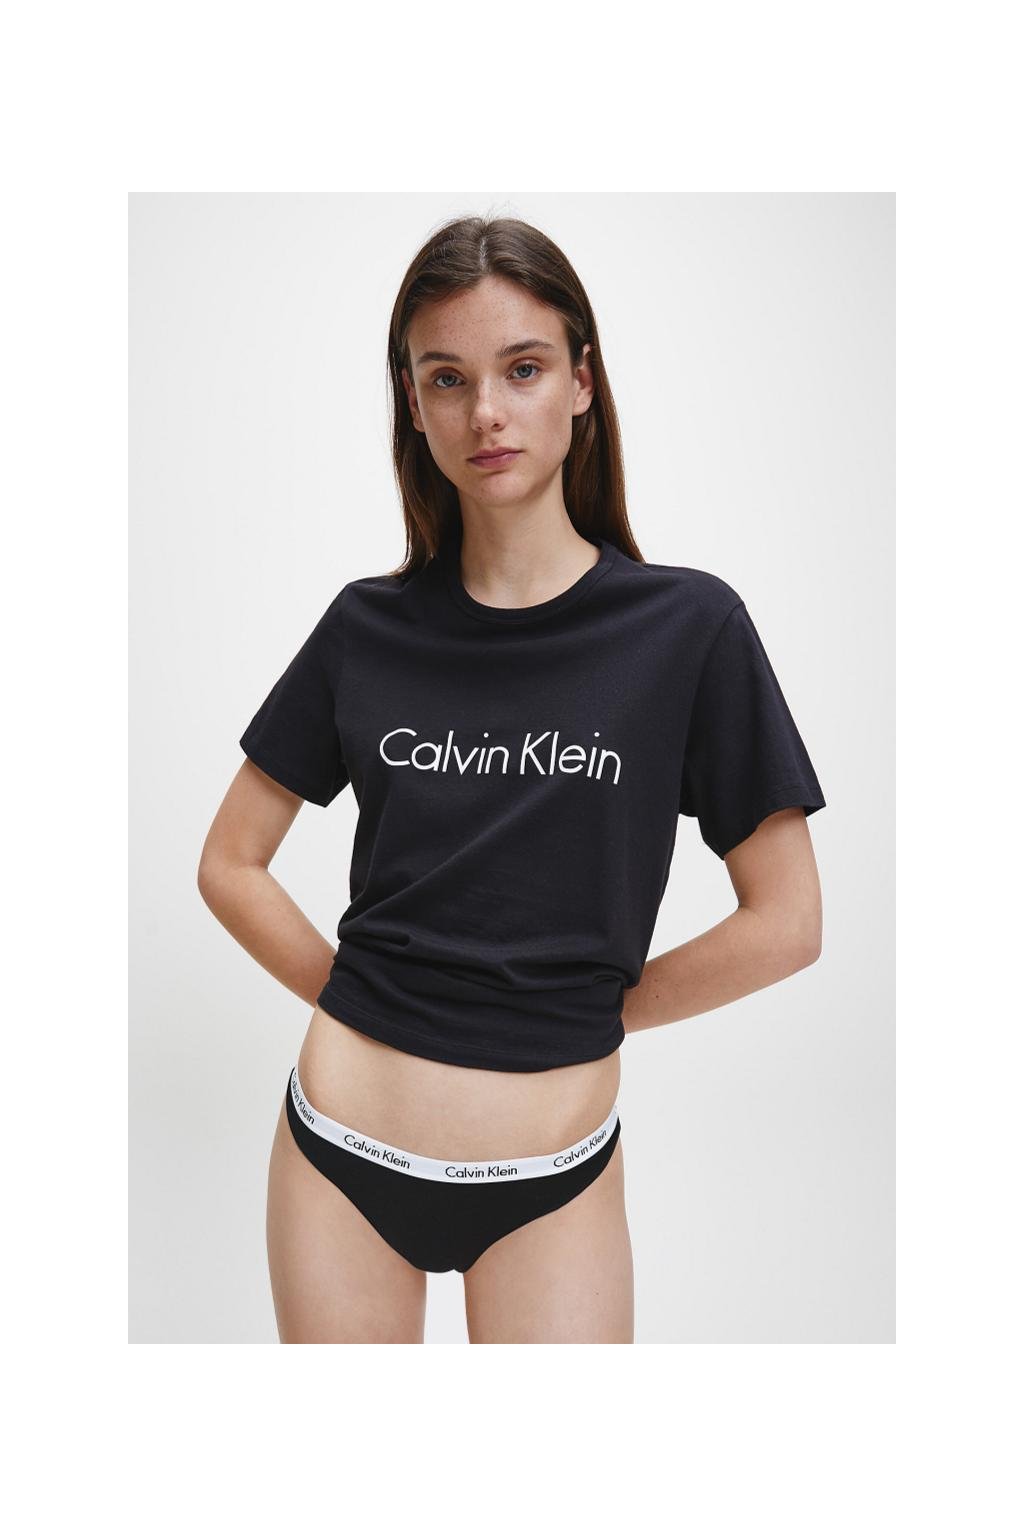 Calvin Klein Logo tričko dámské - černé